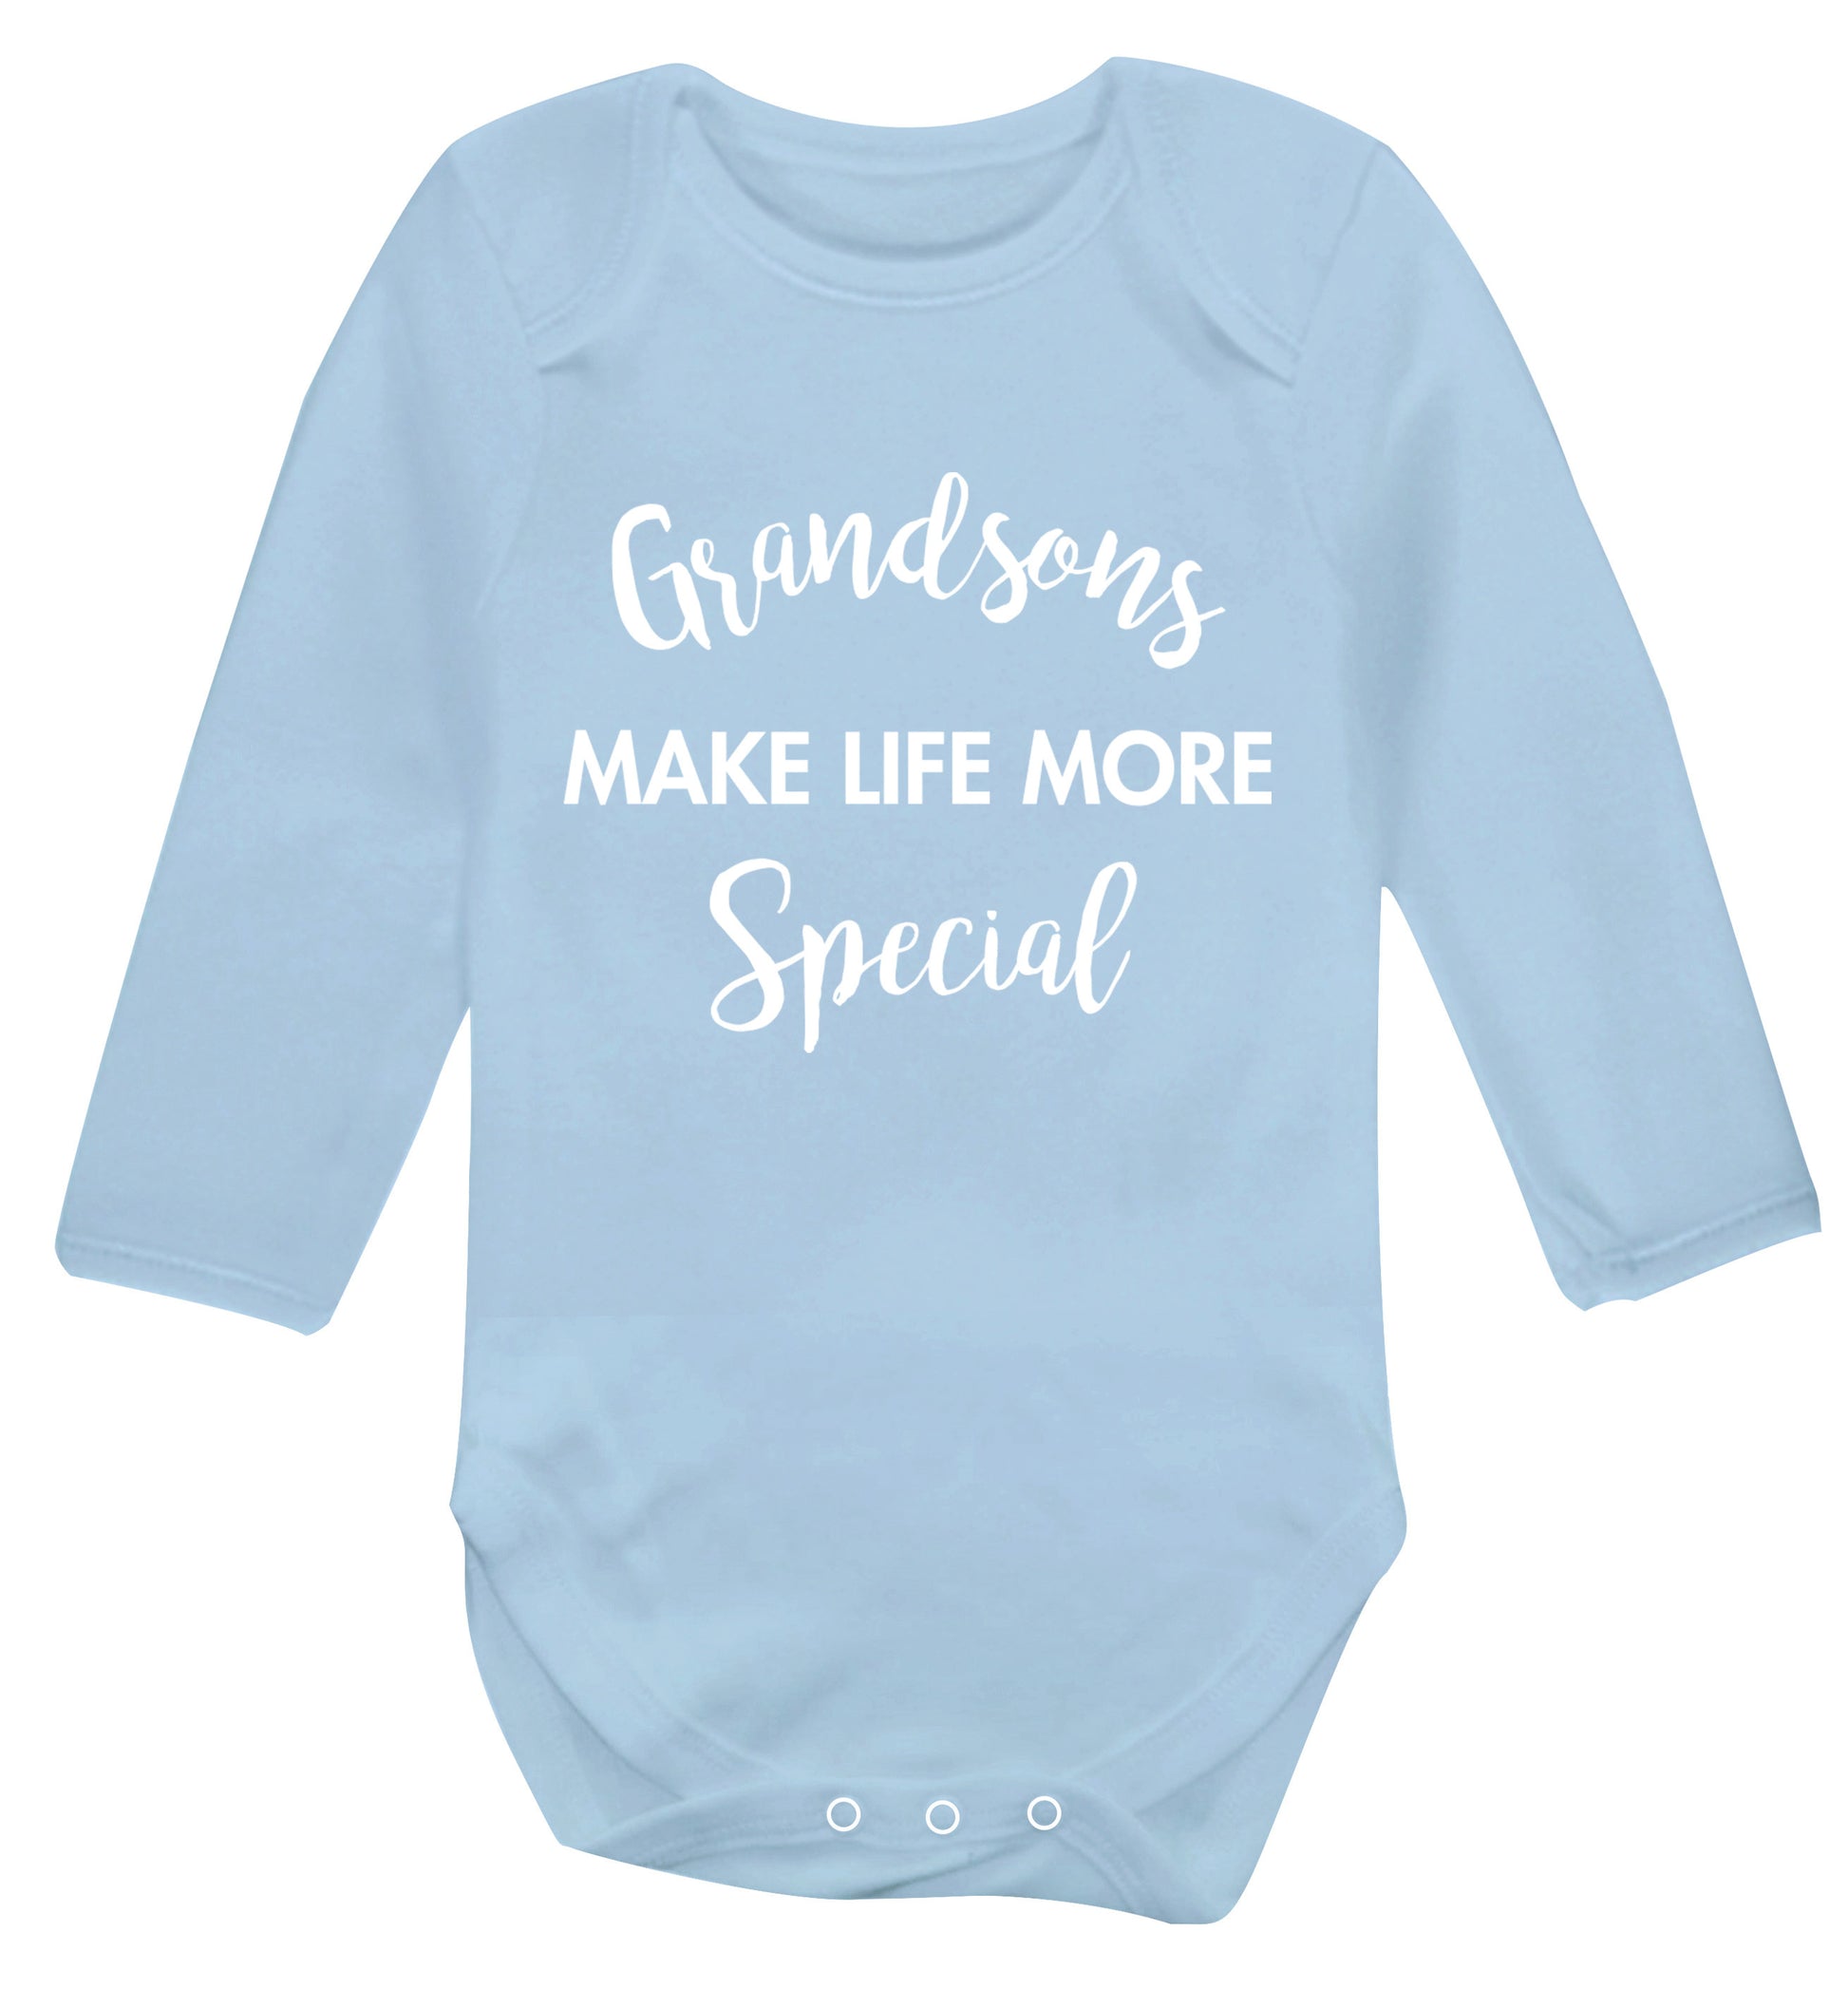 Grandsons make life more special Baby Vest long sleeved pale blue 6-12 months